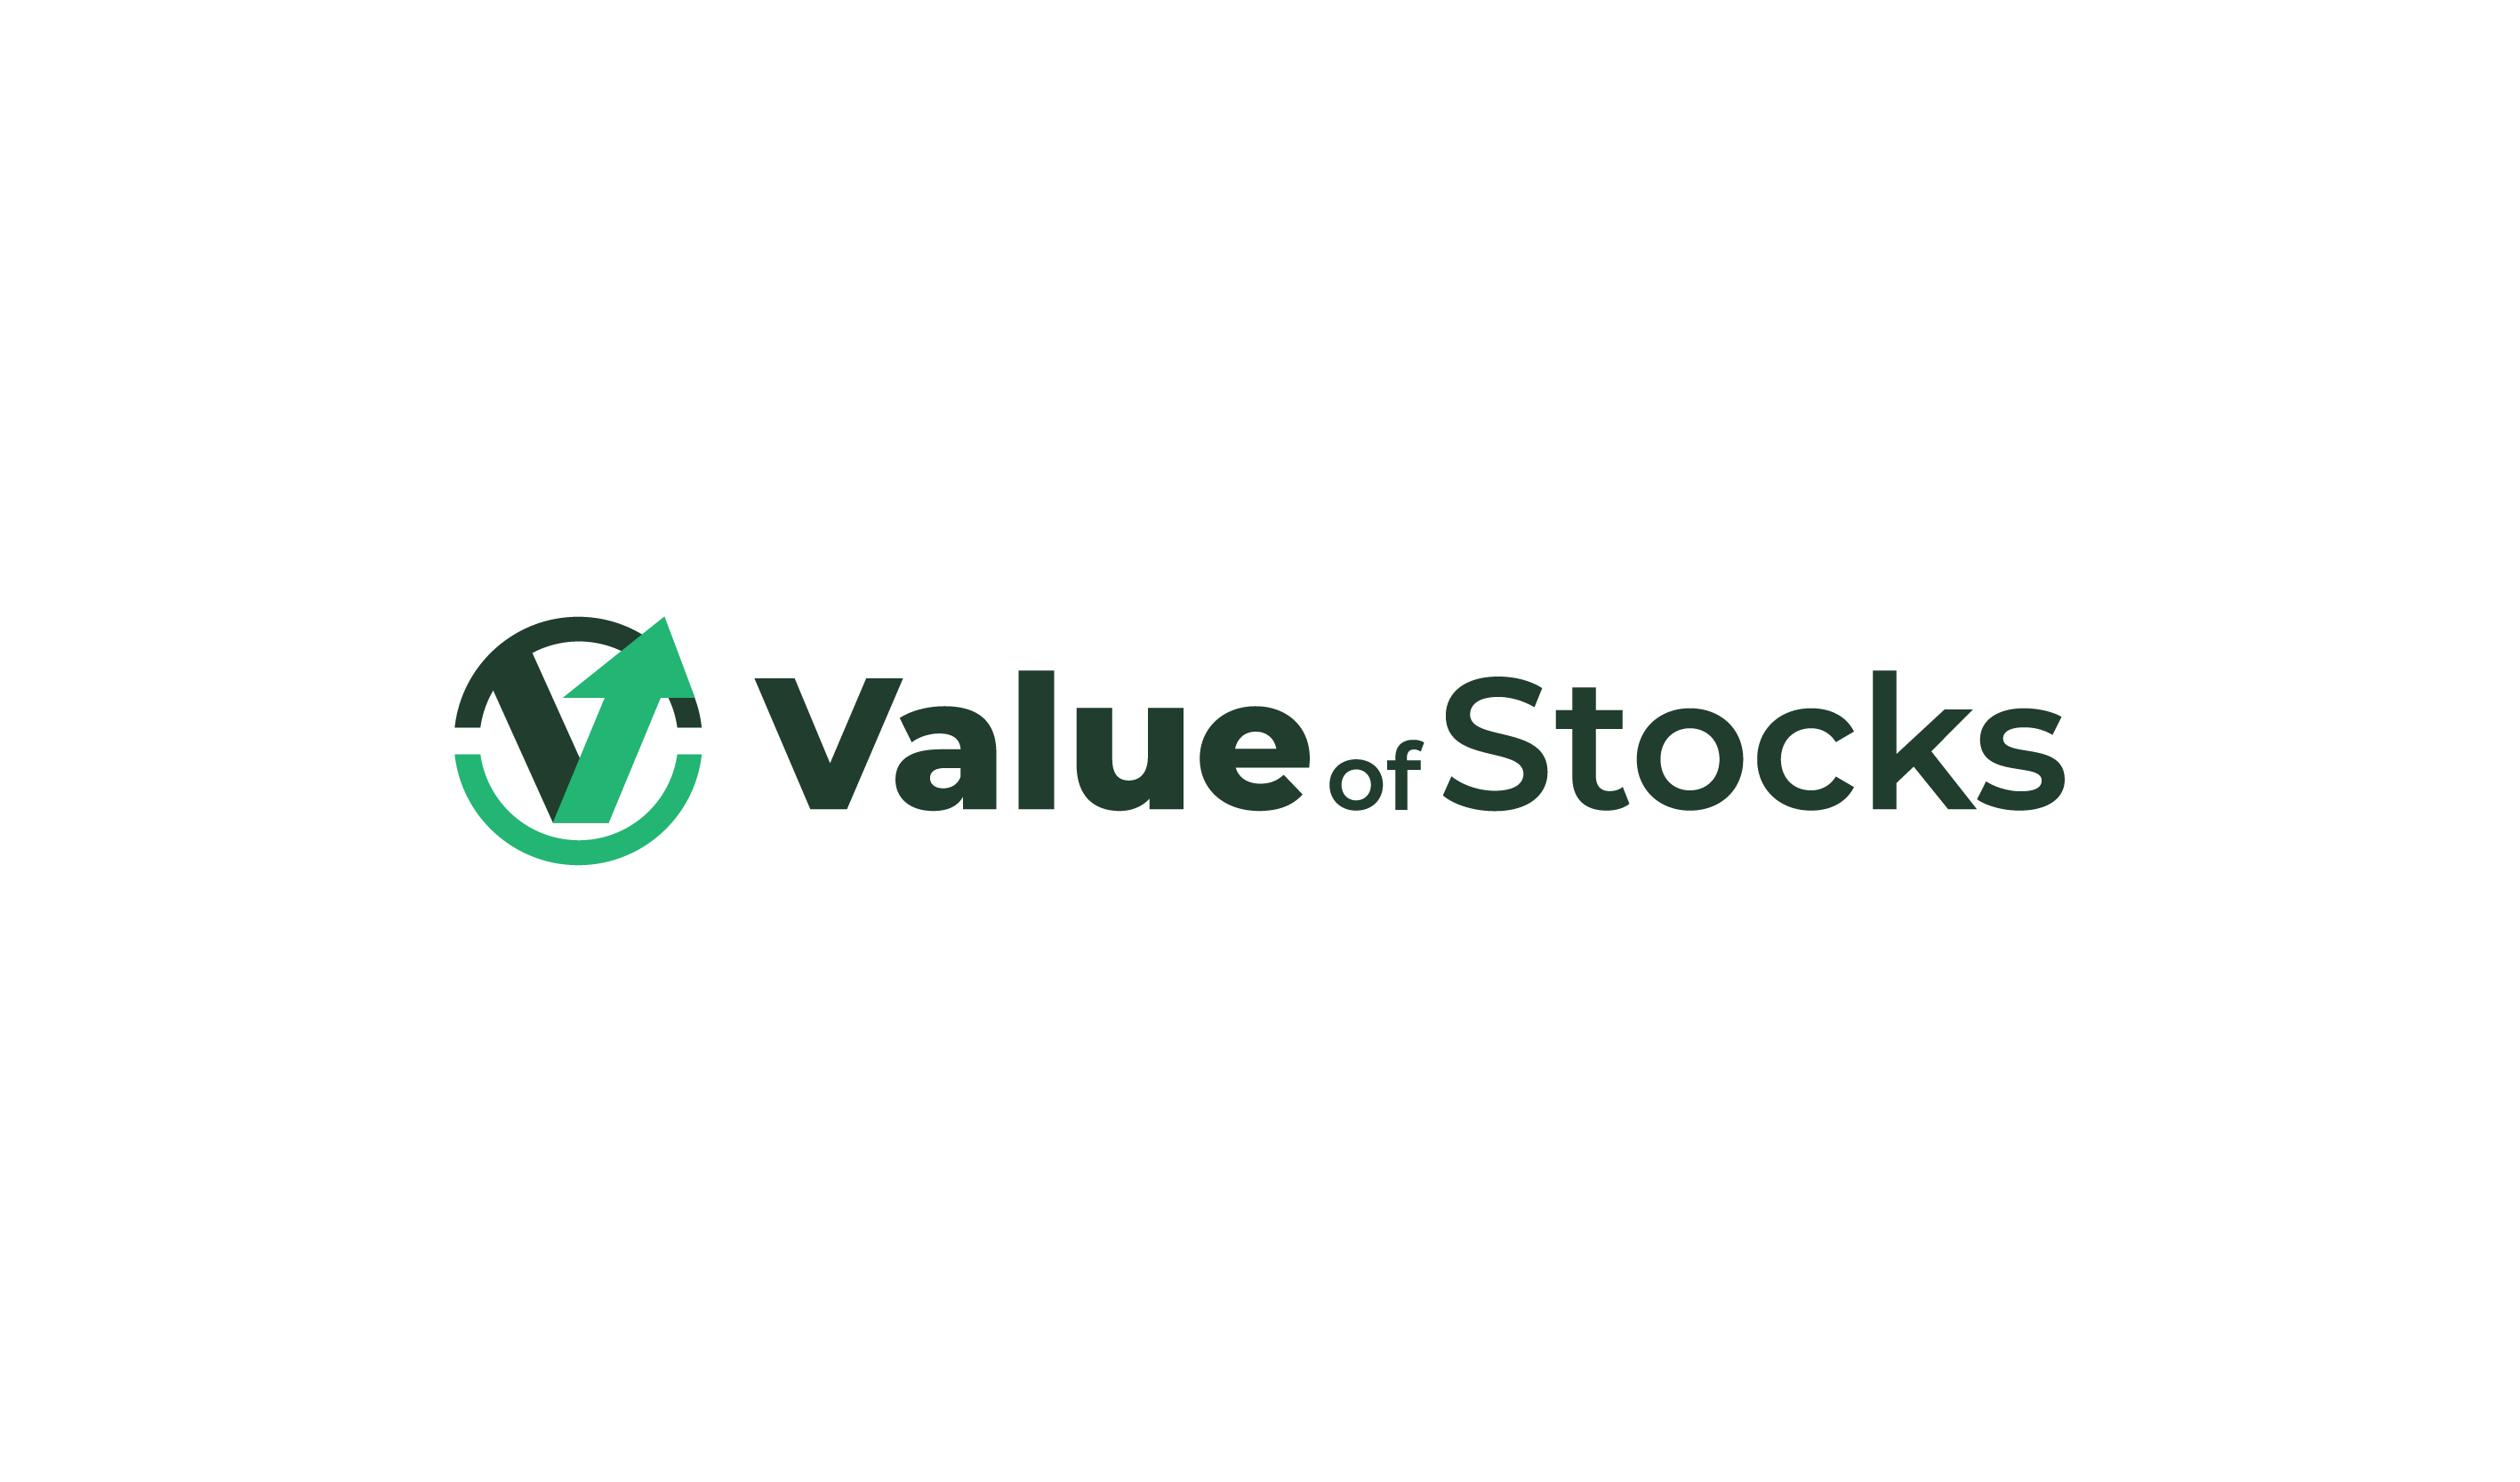 Value of Stocks